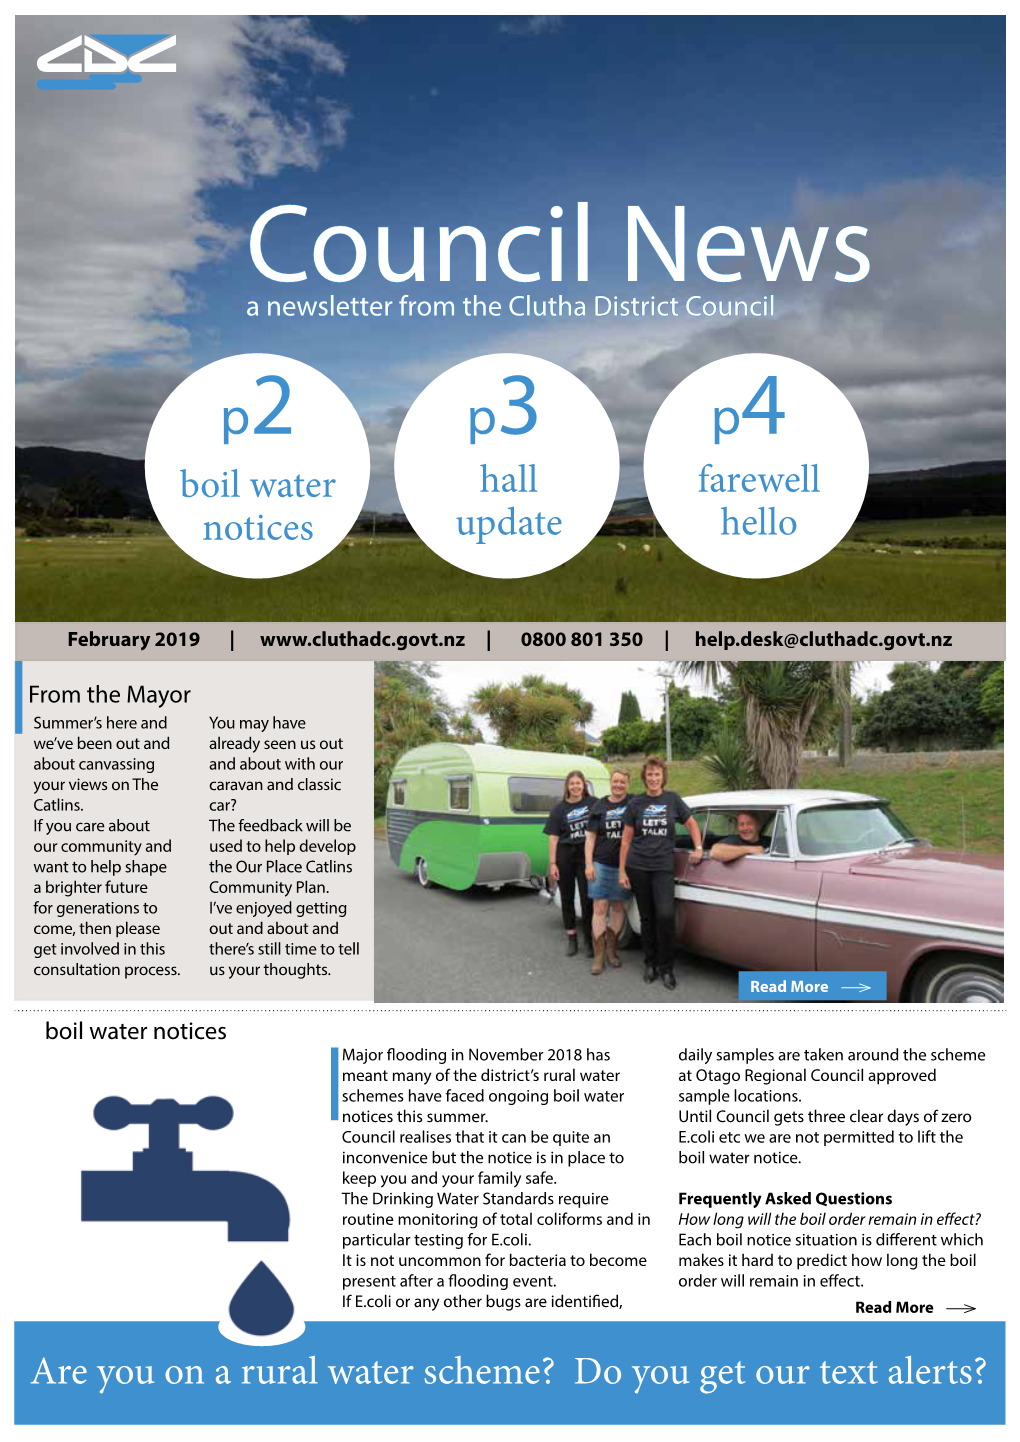 Council News February 2019